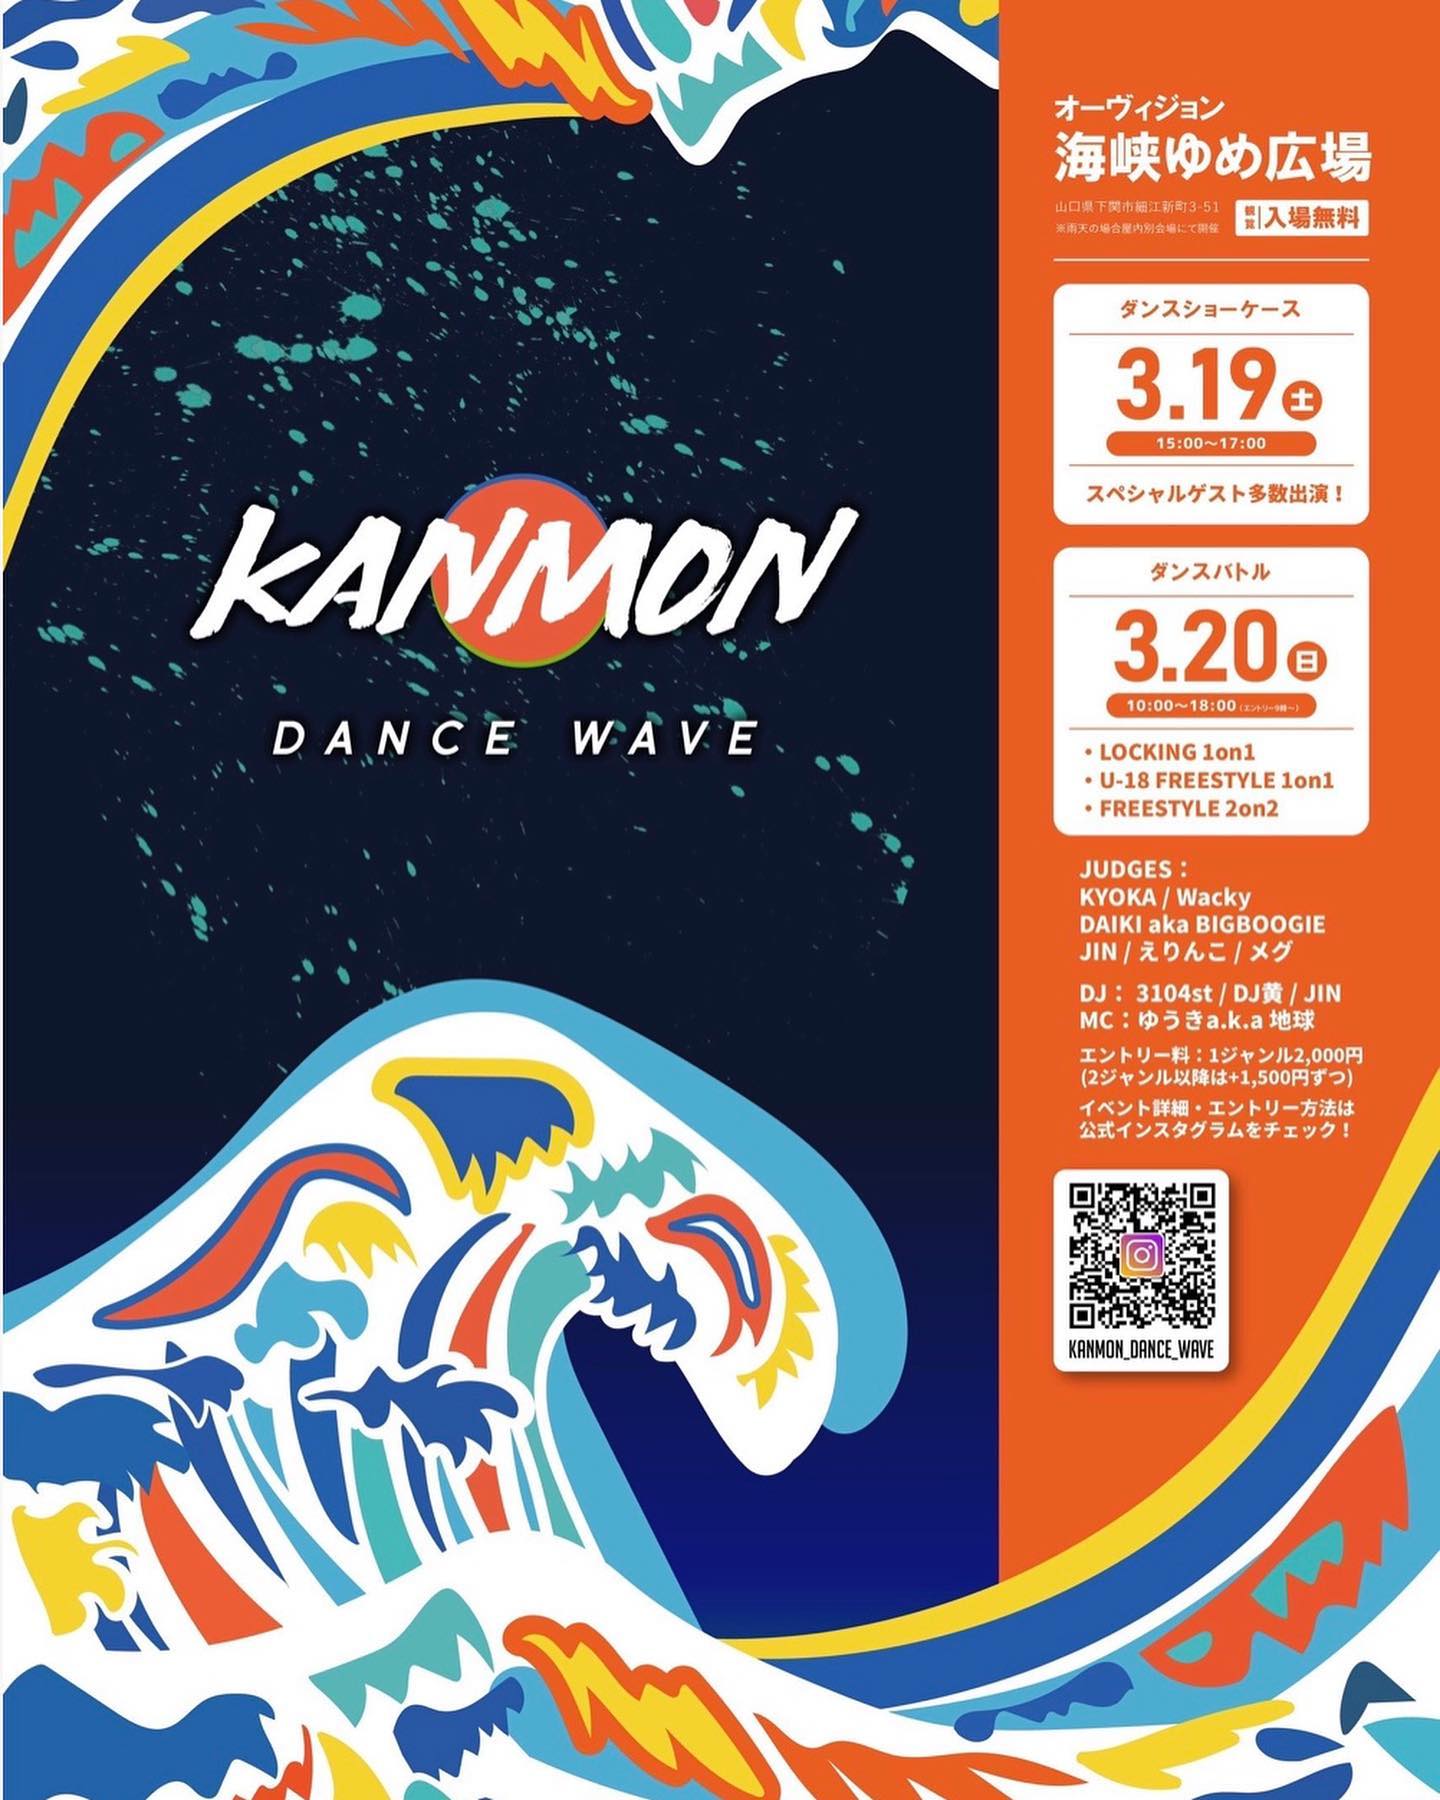 「THE GATE」「KANMON DANCE WAVE」のサムネイル画像1